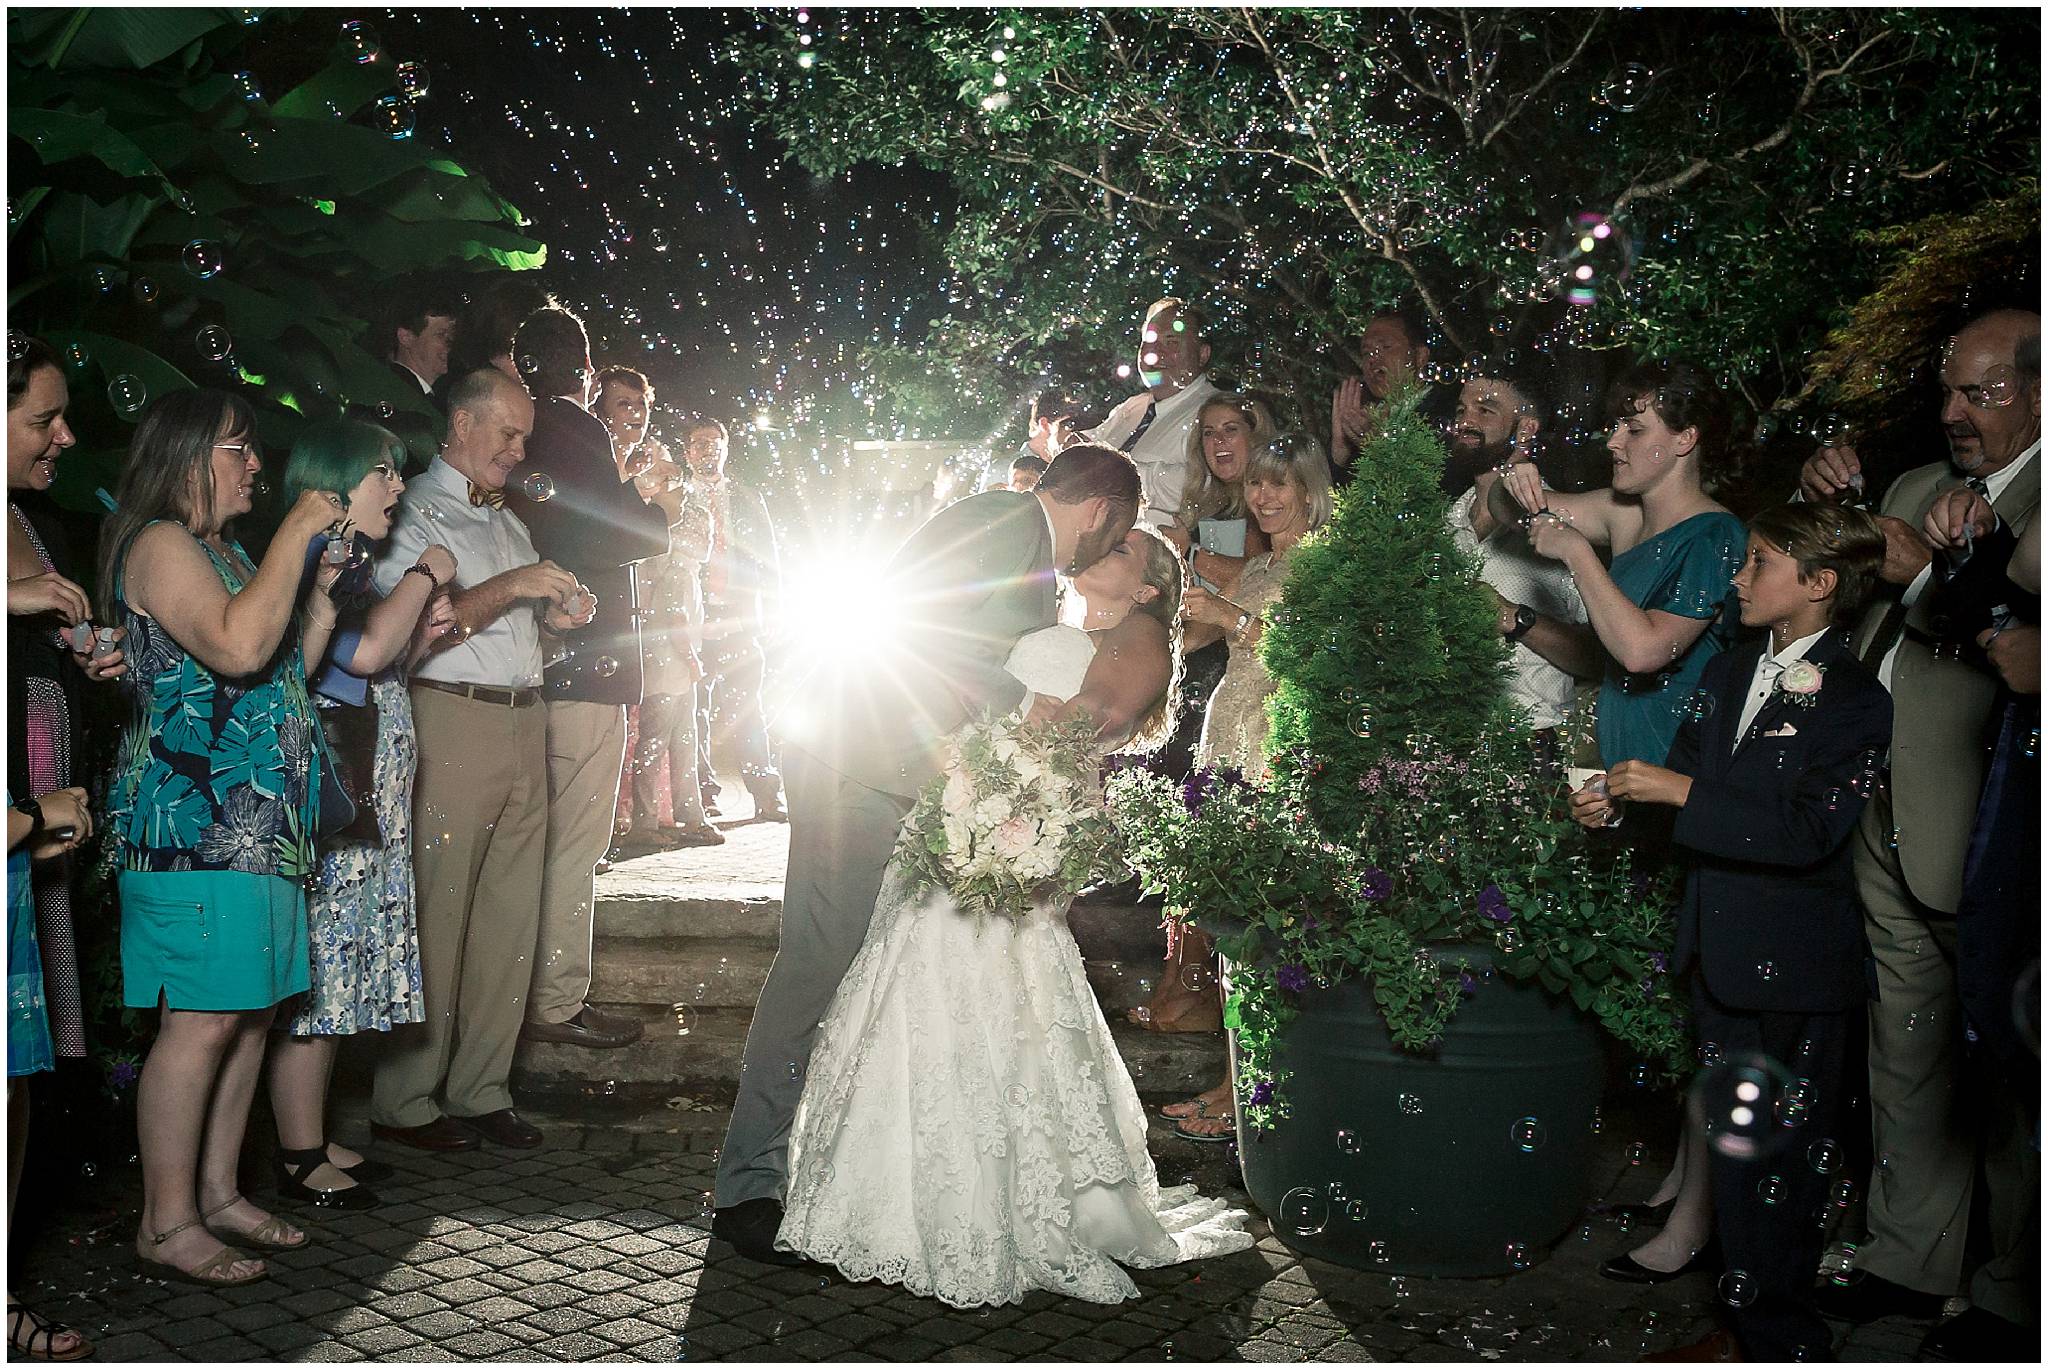 State Botanical Gardesn best wedding photographers in athens georgia ga_0078.jpg